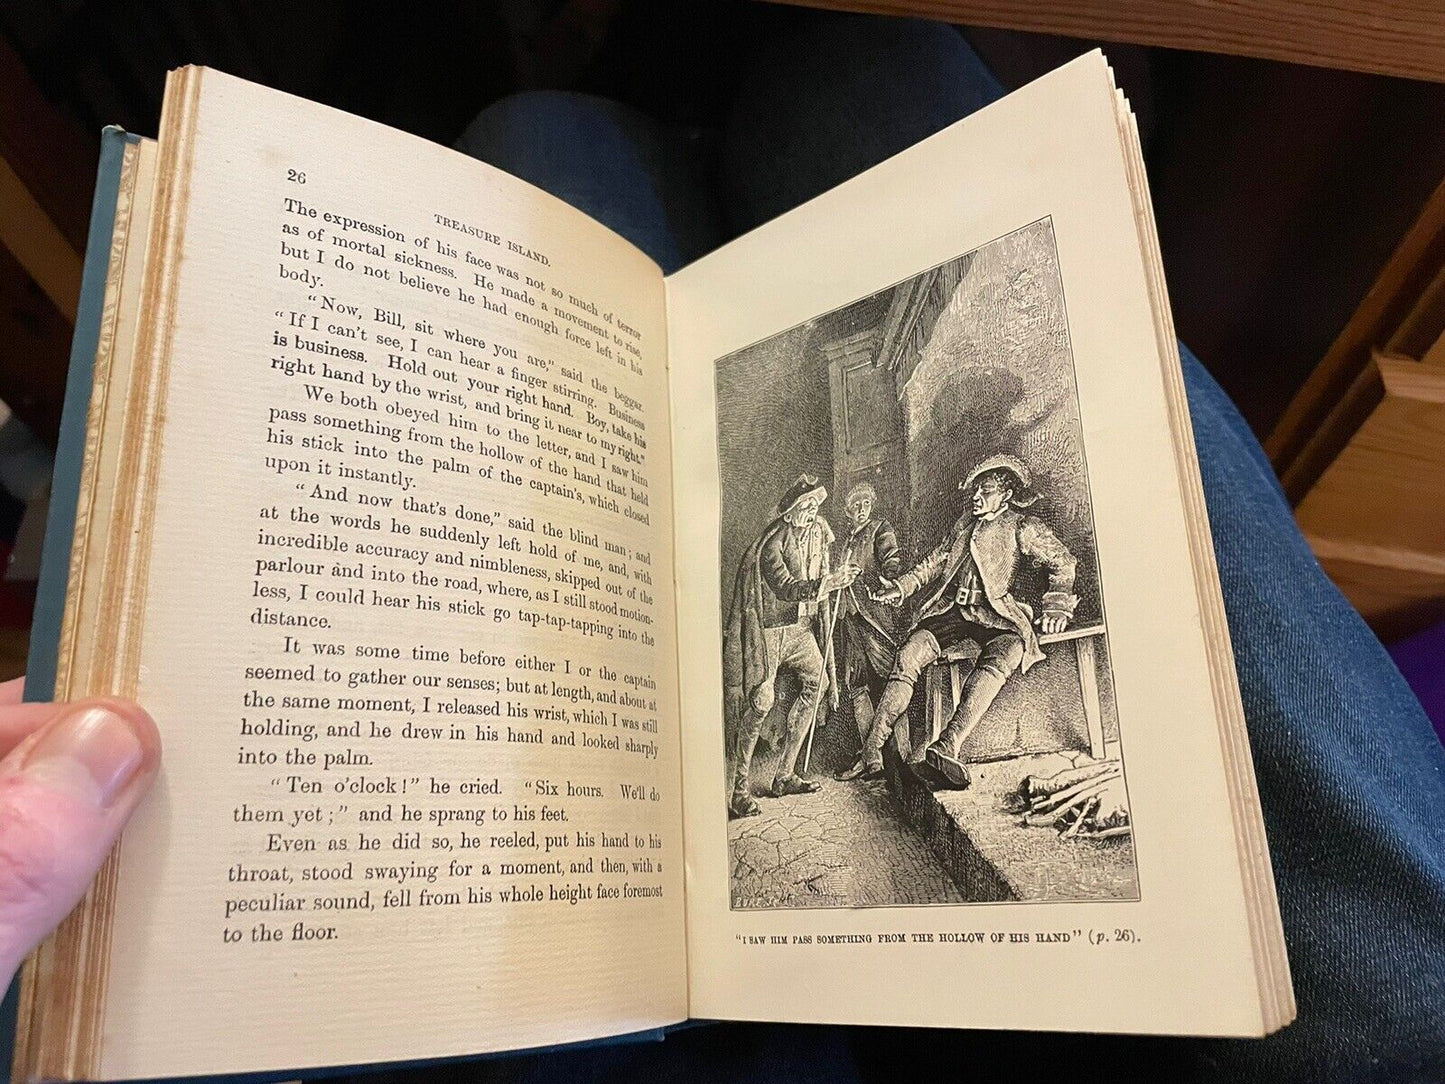 TREASURE ISLAND Robert Louis Stevenson ILLUSTRATED EDITION 1899 : Great Copy